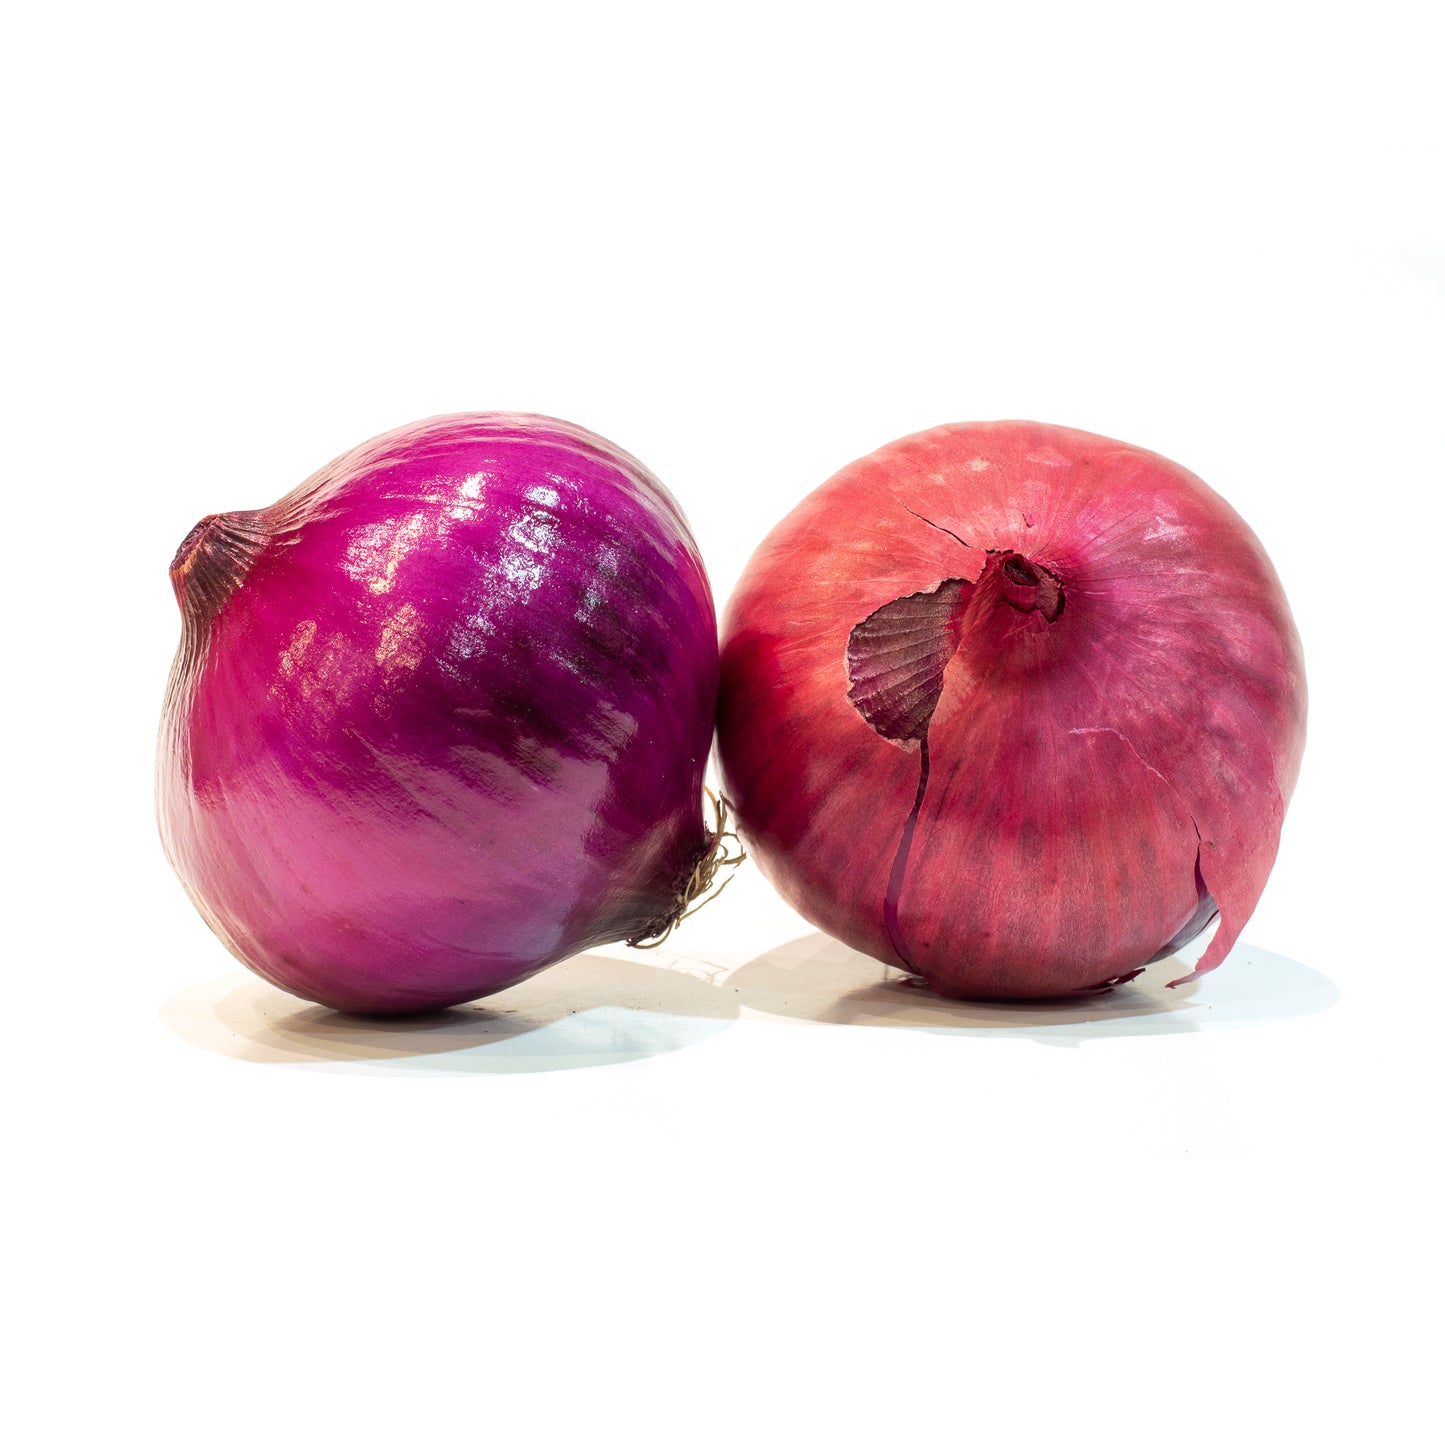 Purple Onions 紫洋葱 (3 LB)